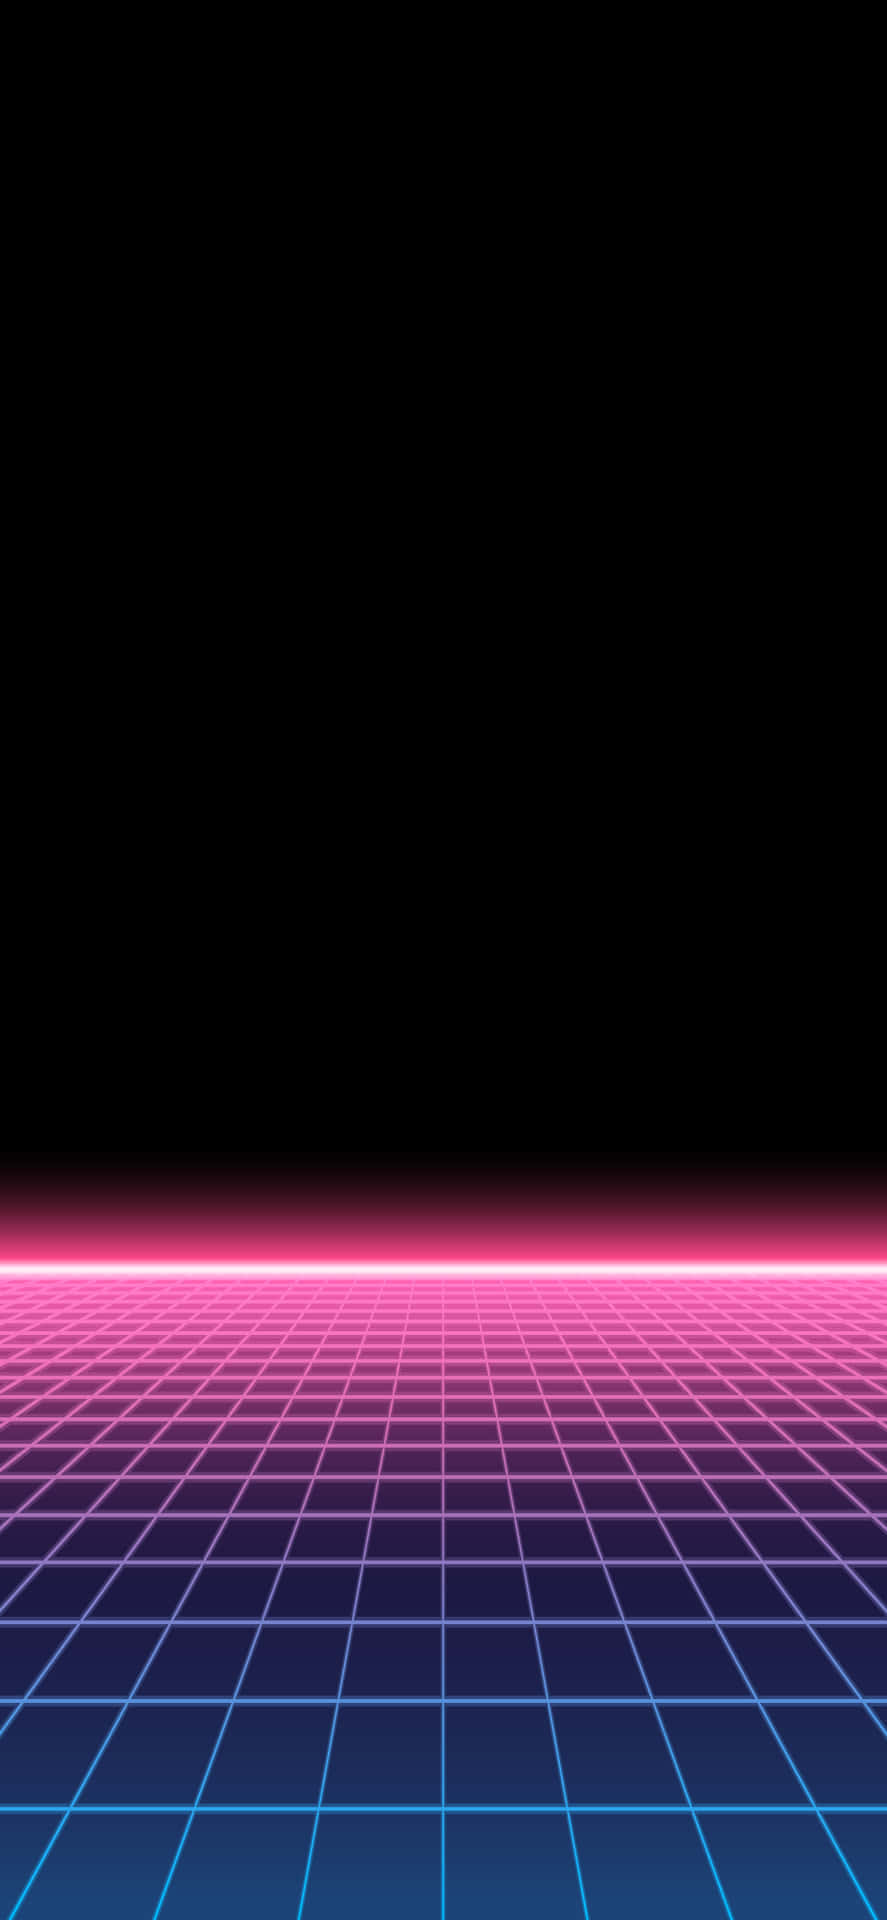 Färgglattsynthwave Pixel 3 Oled-bakgrundsbild.